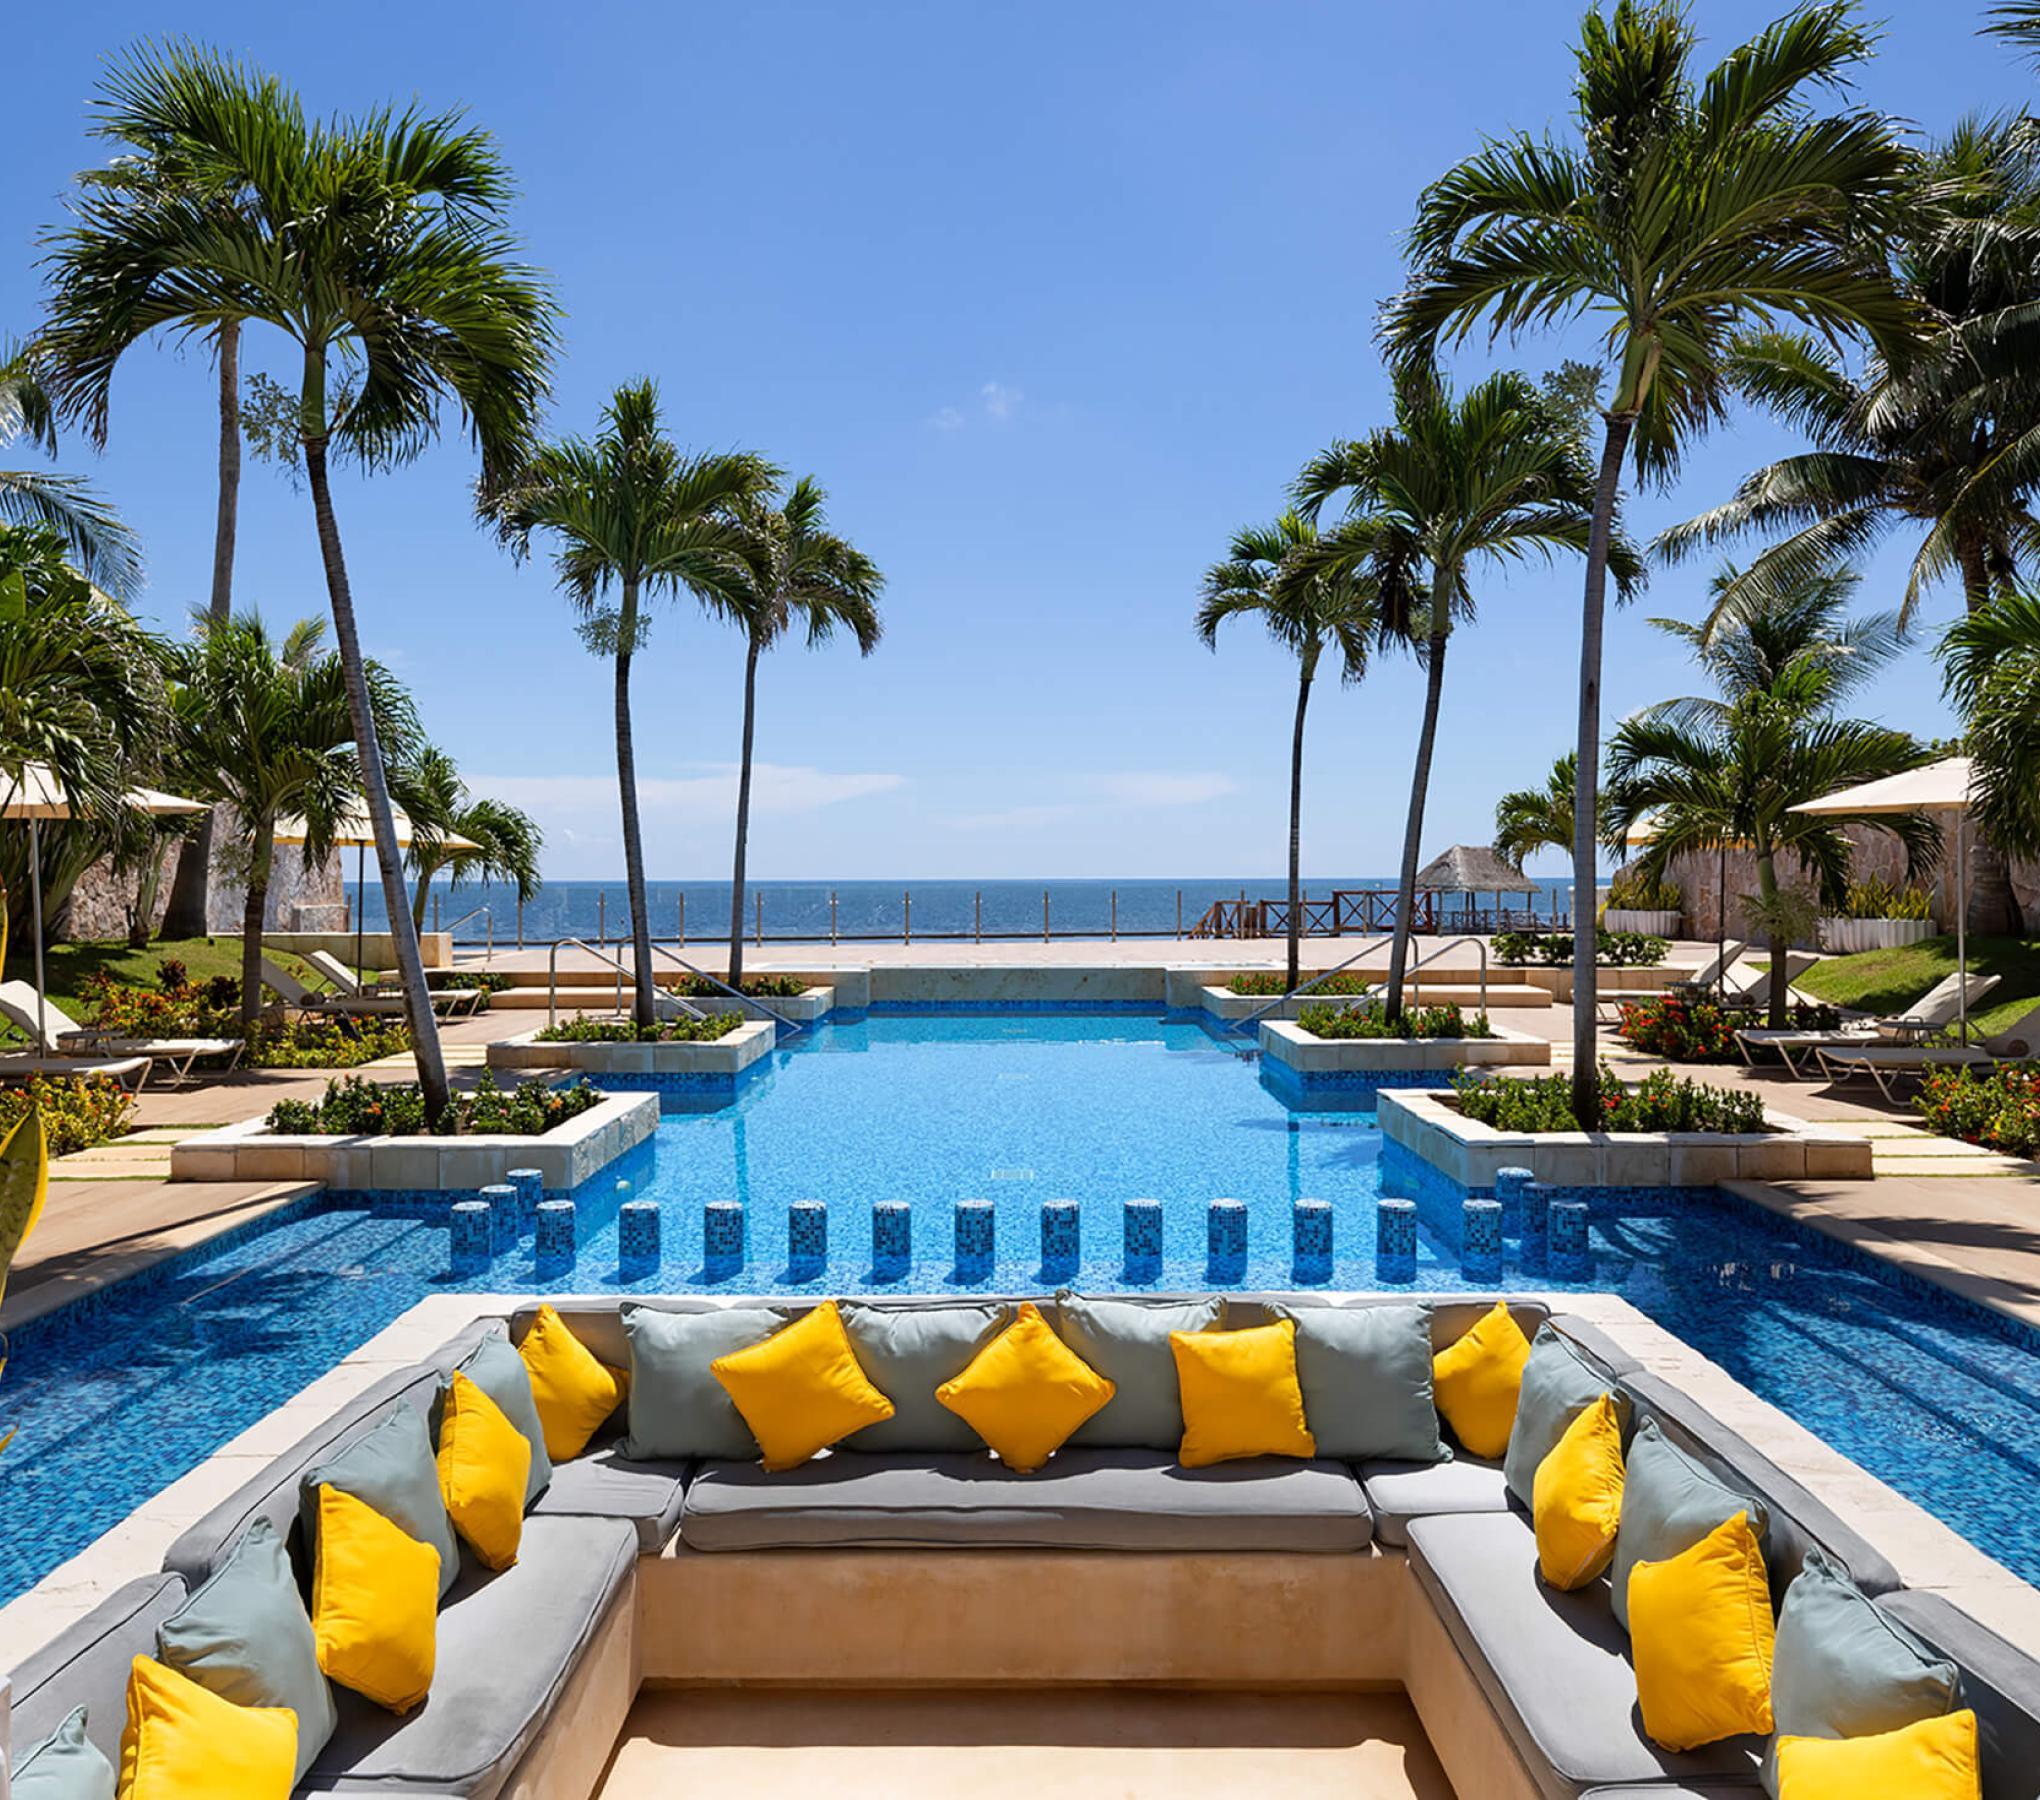 Azul Villa Casa Del Mar outdoor seating and pool